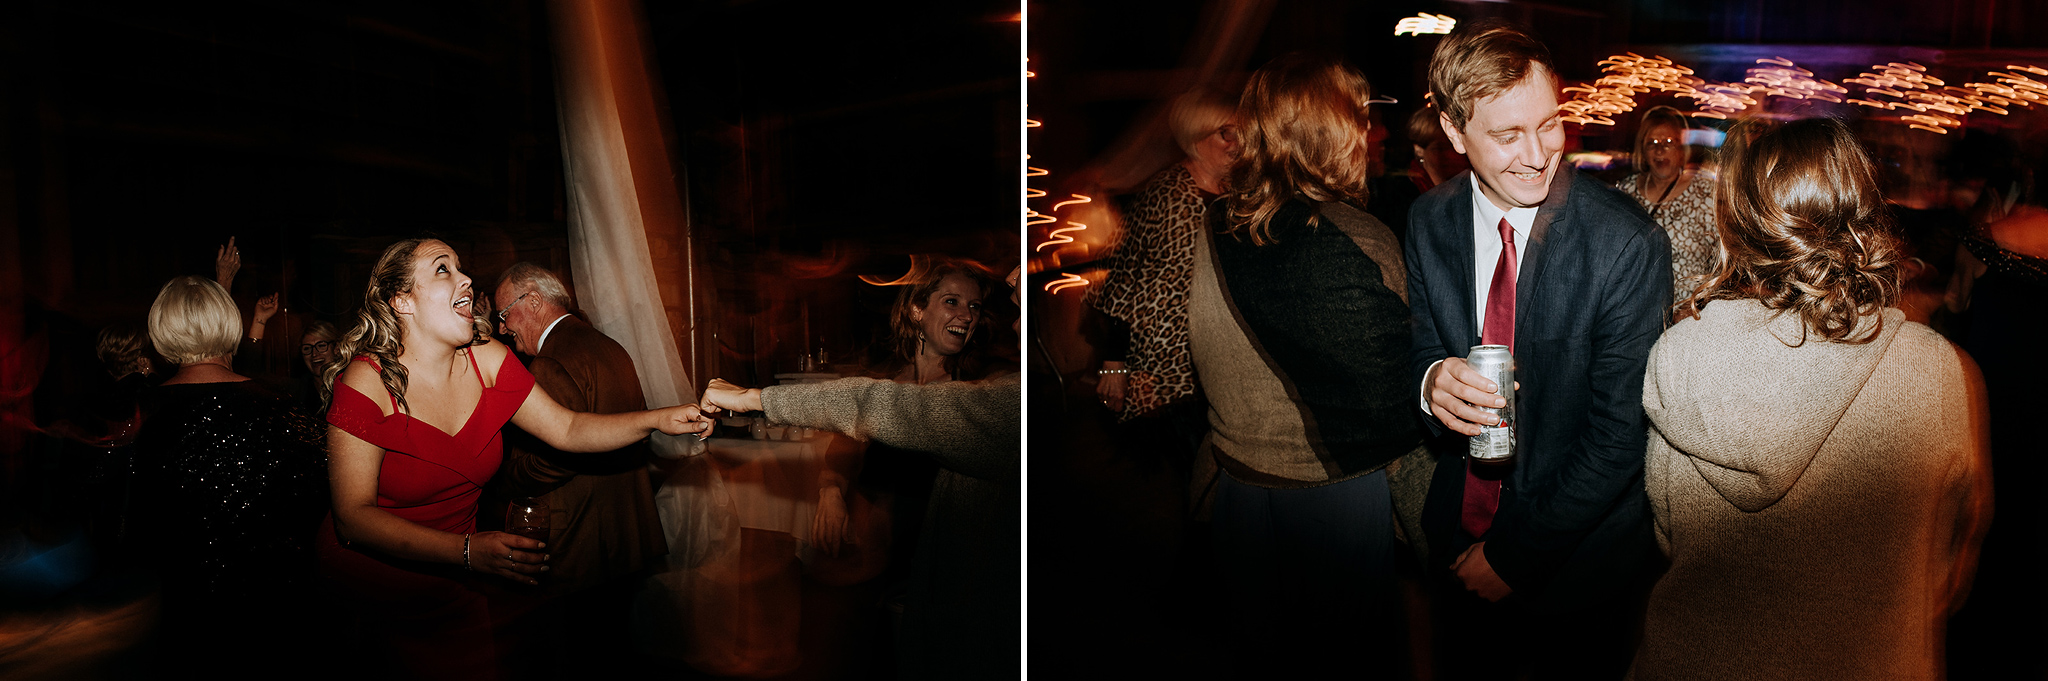 fun dance floor photos with shutter drag at meaford barn wedding